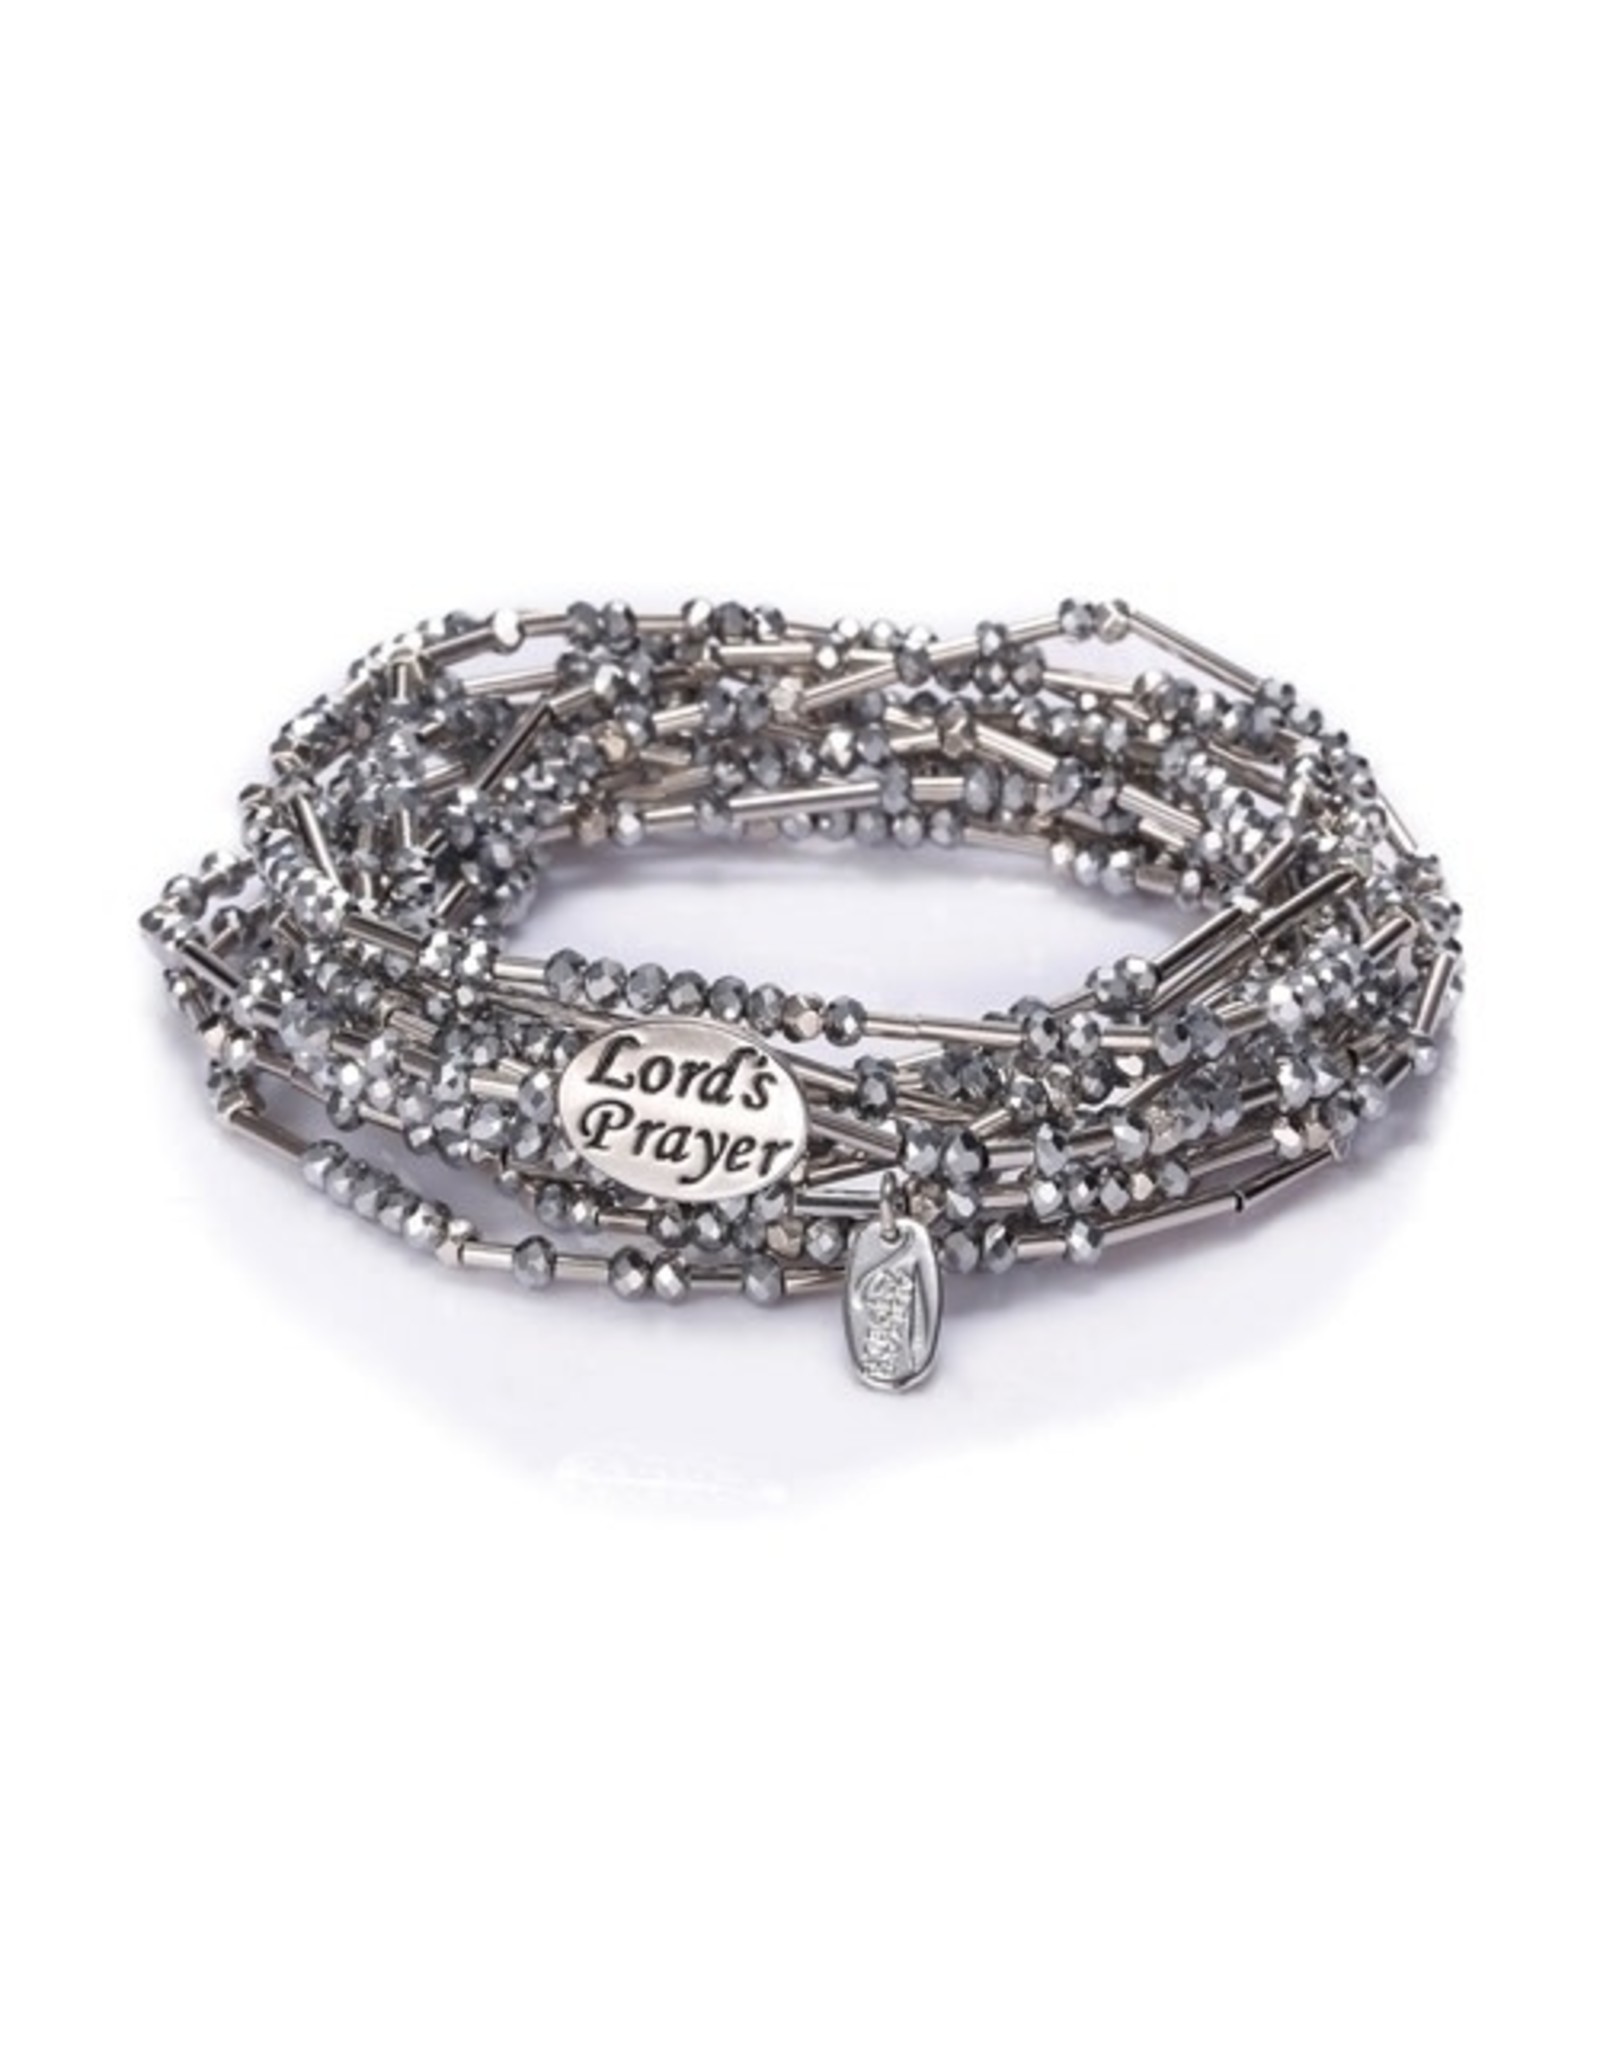 Roman Lord's Prayer Morse Code Necklace/Wrap Bracelet